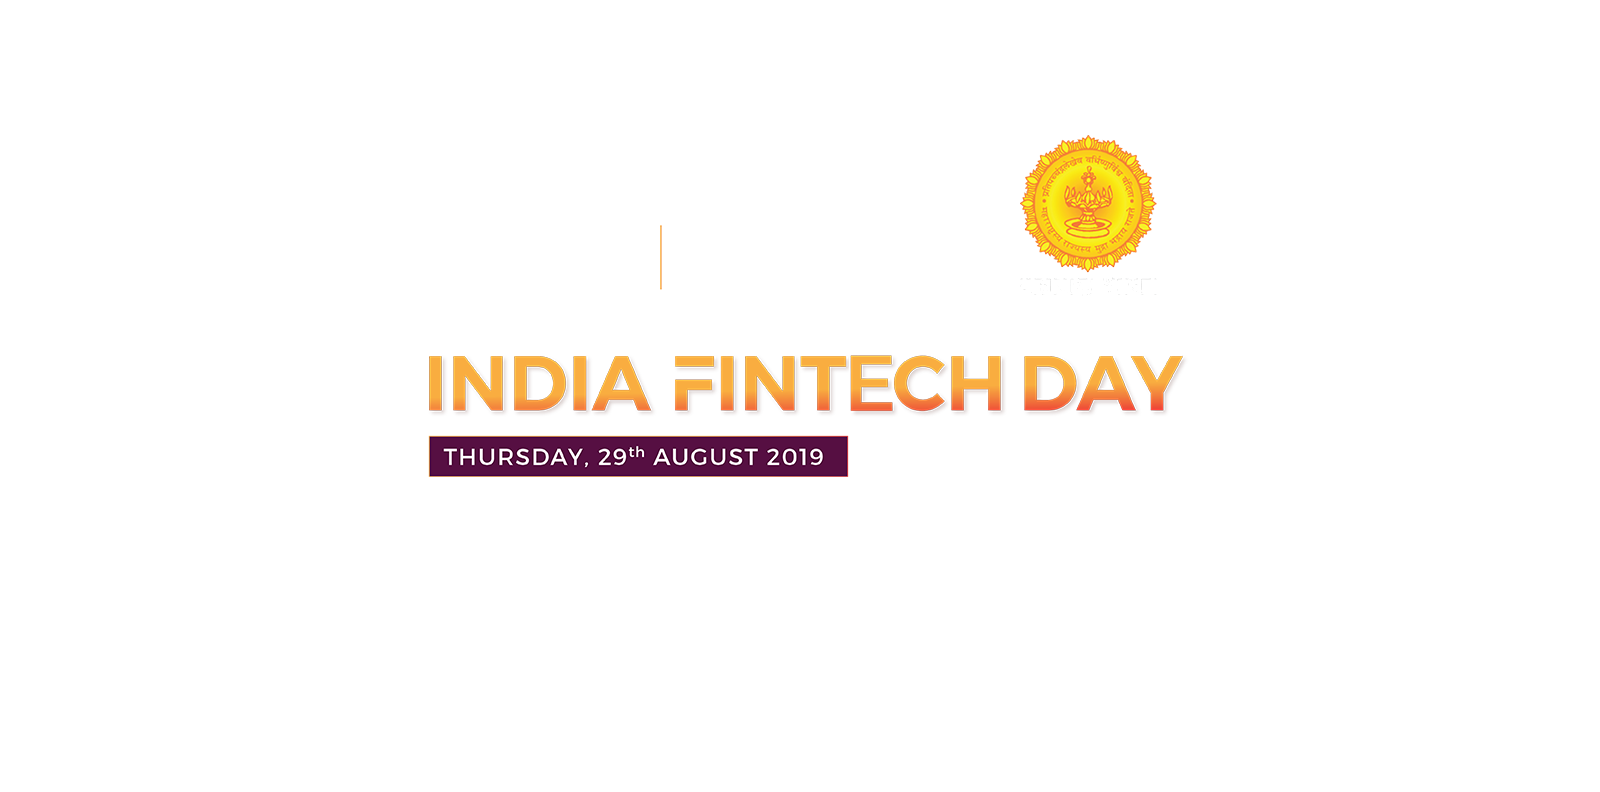 India Fintech Day 2019